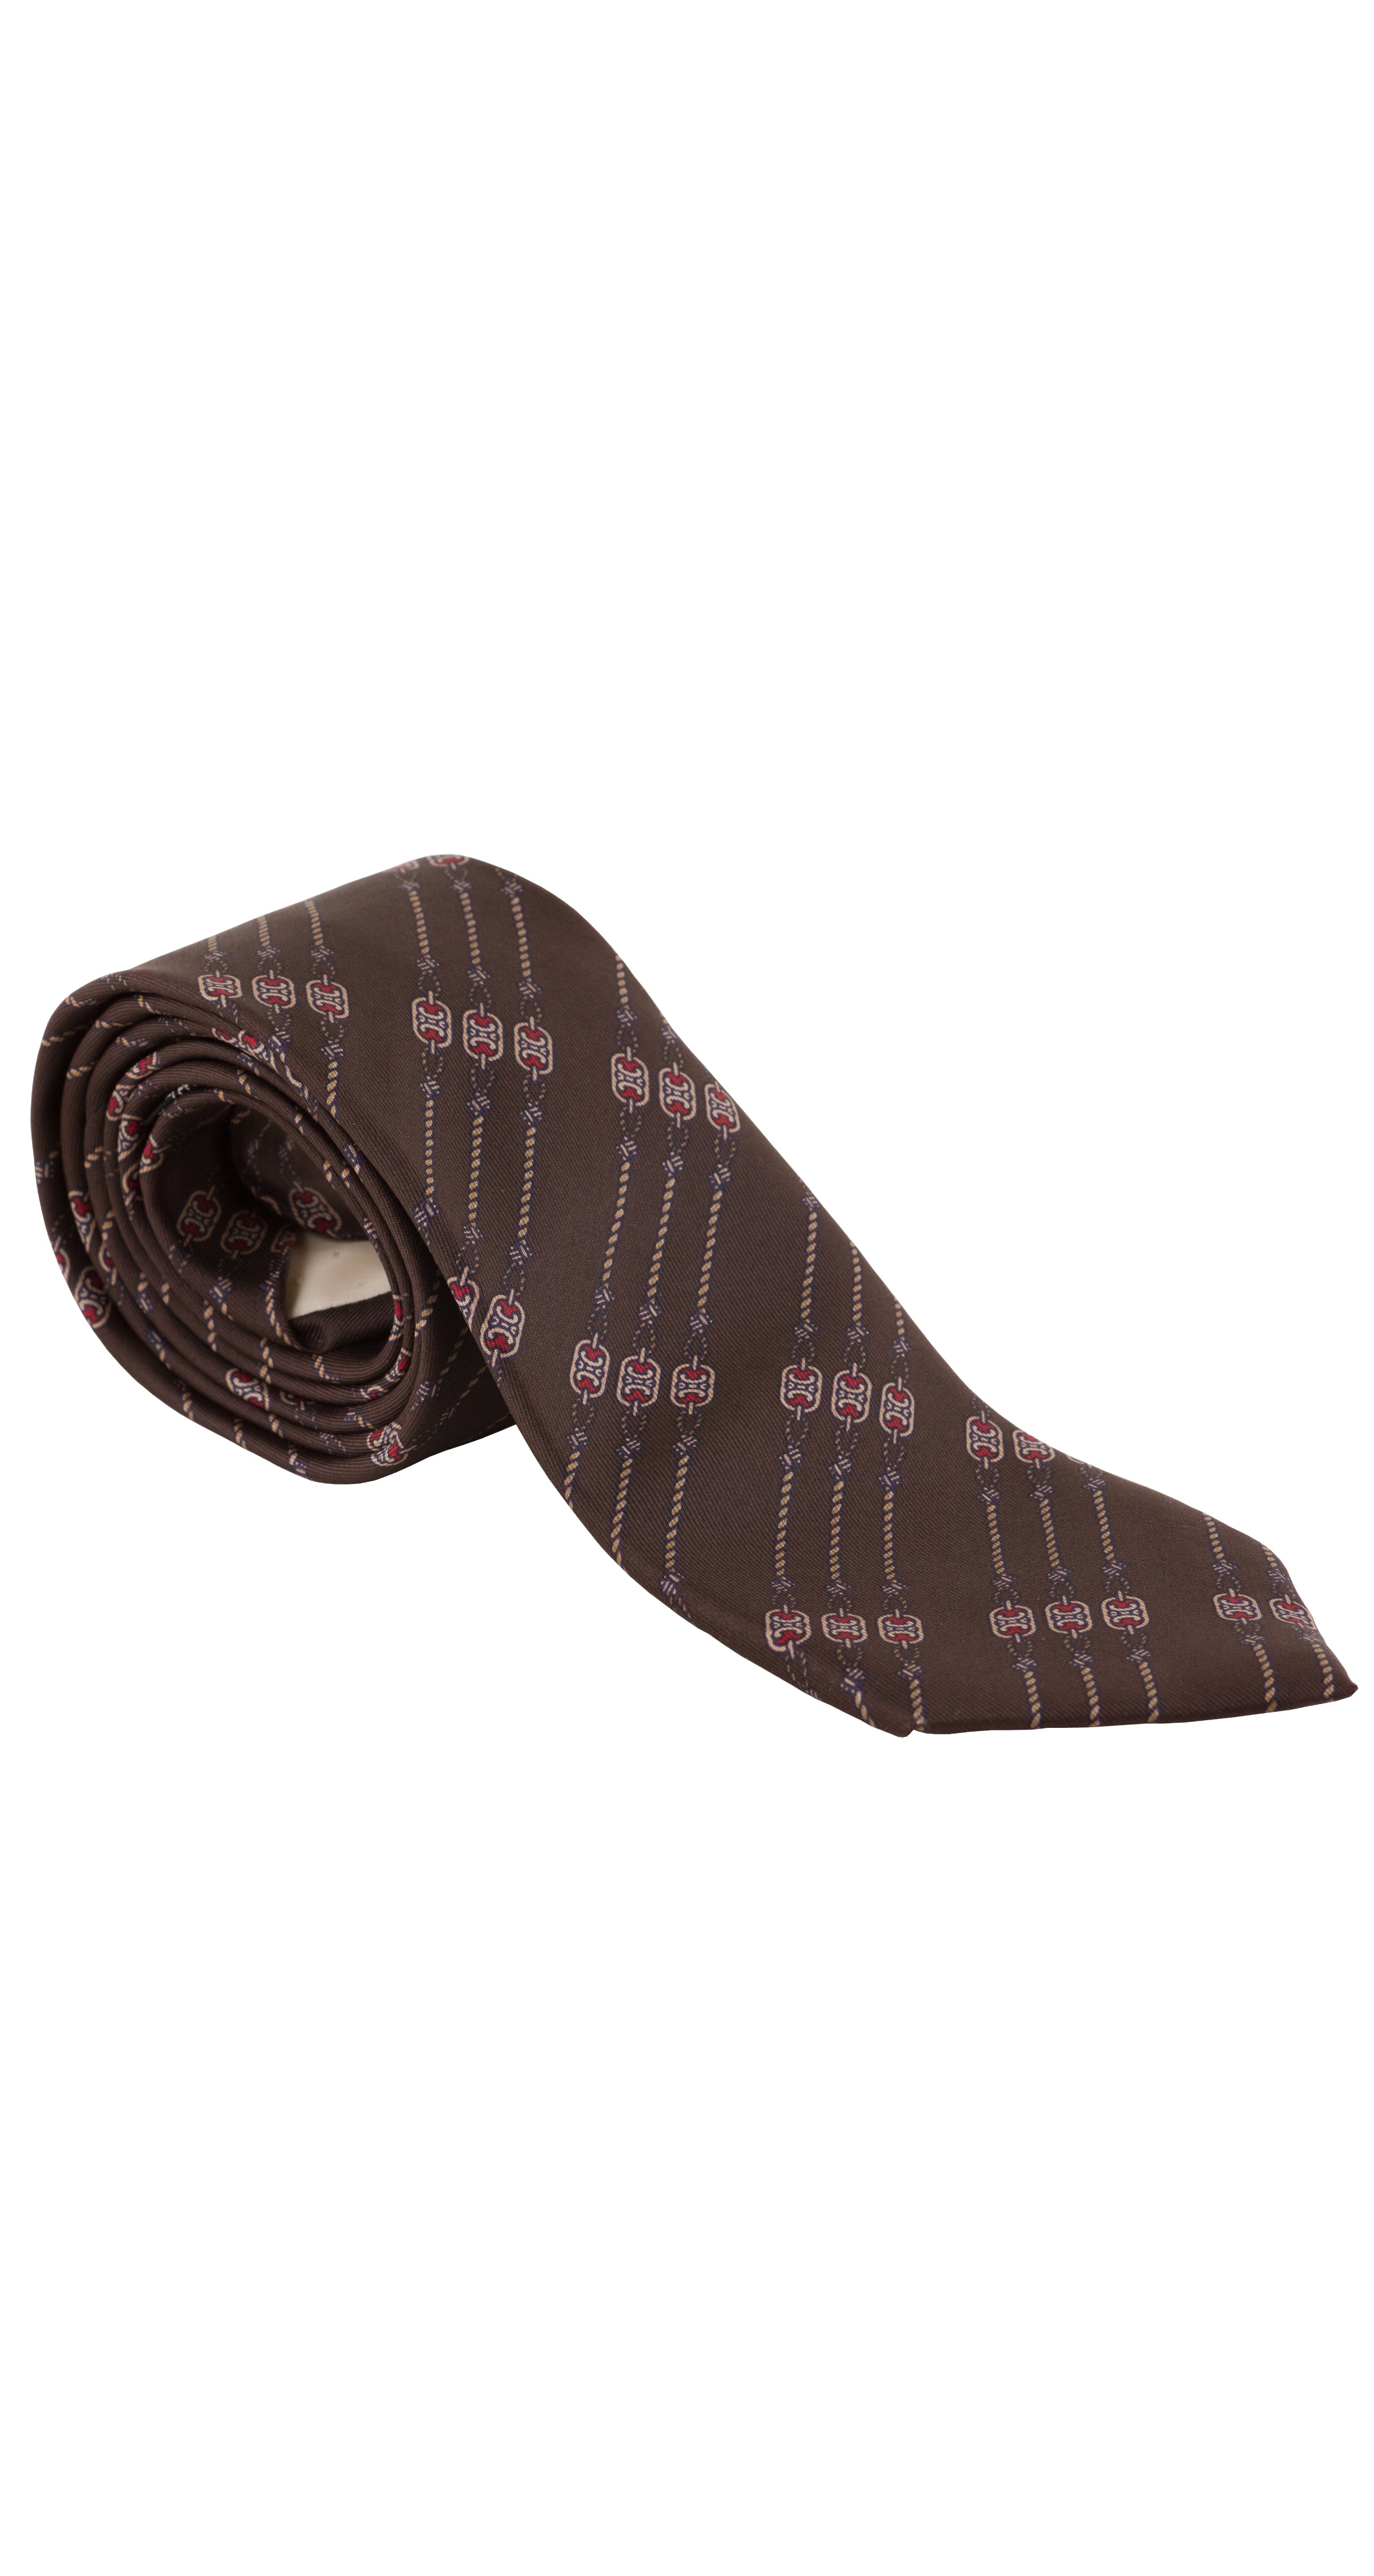 1970s Anchor Chain-Link Print Brown Silk Twill Men's Tie